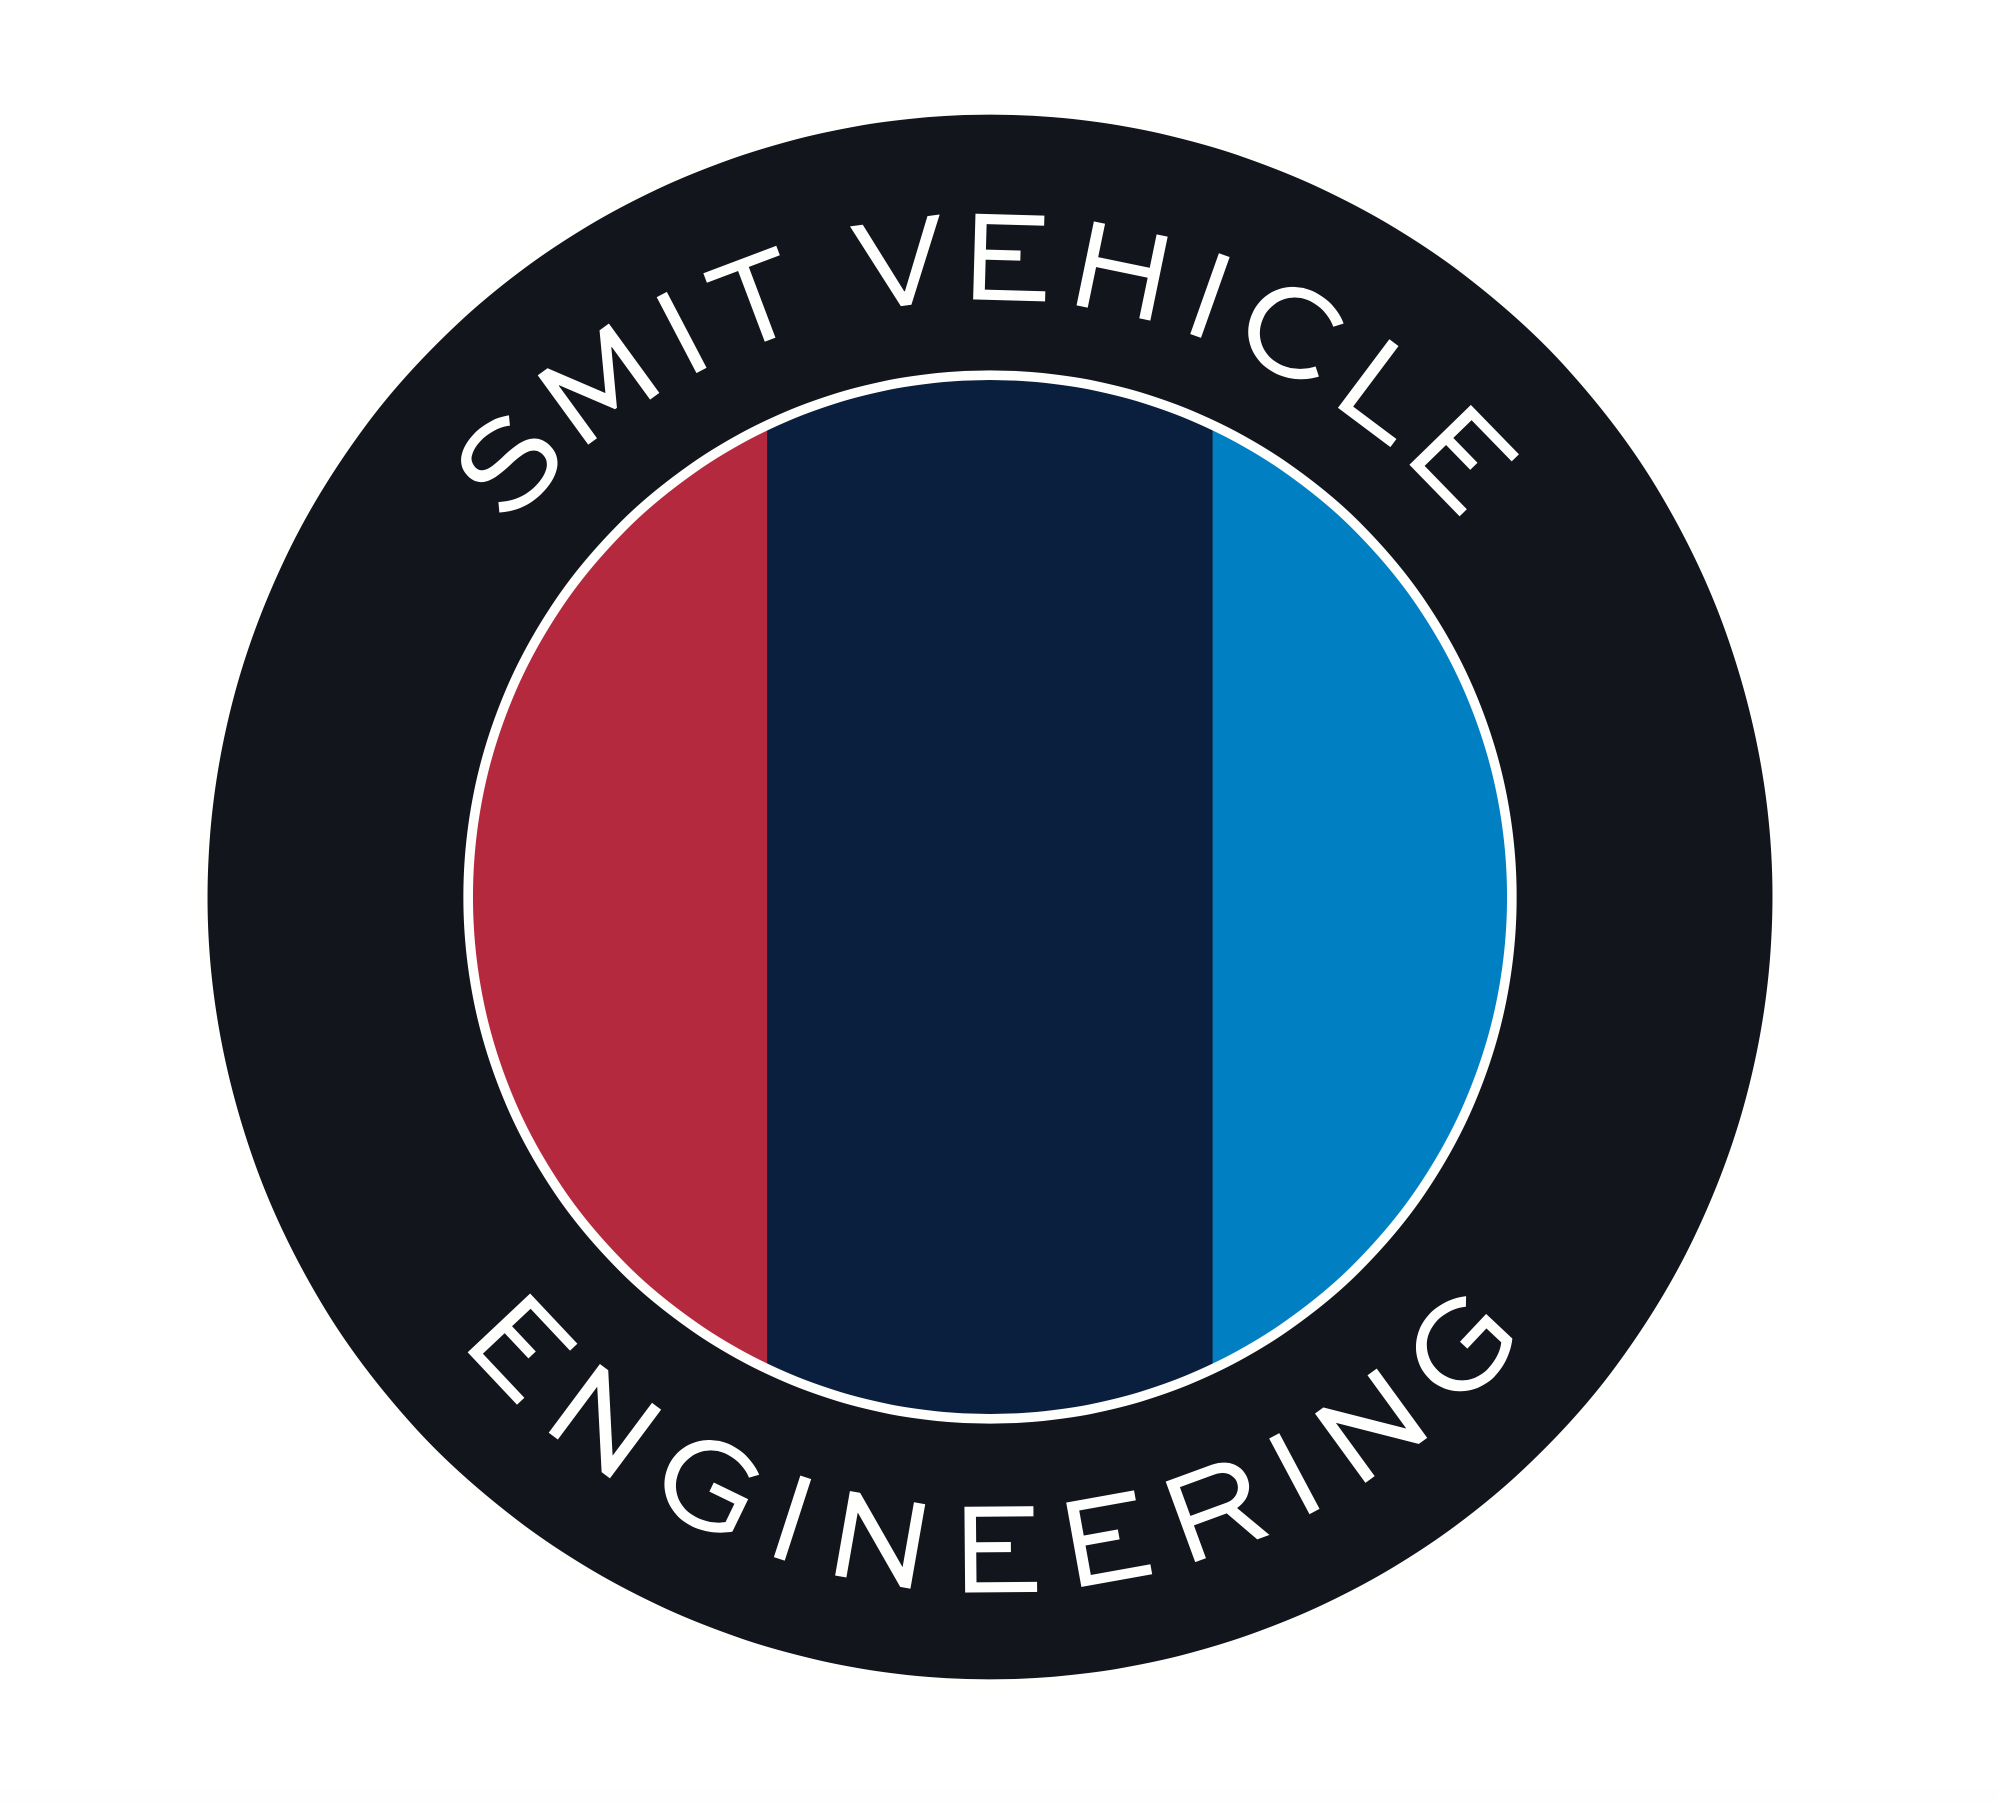 Smit Vehicle Engineering